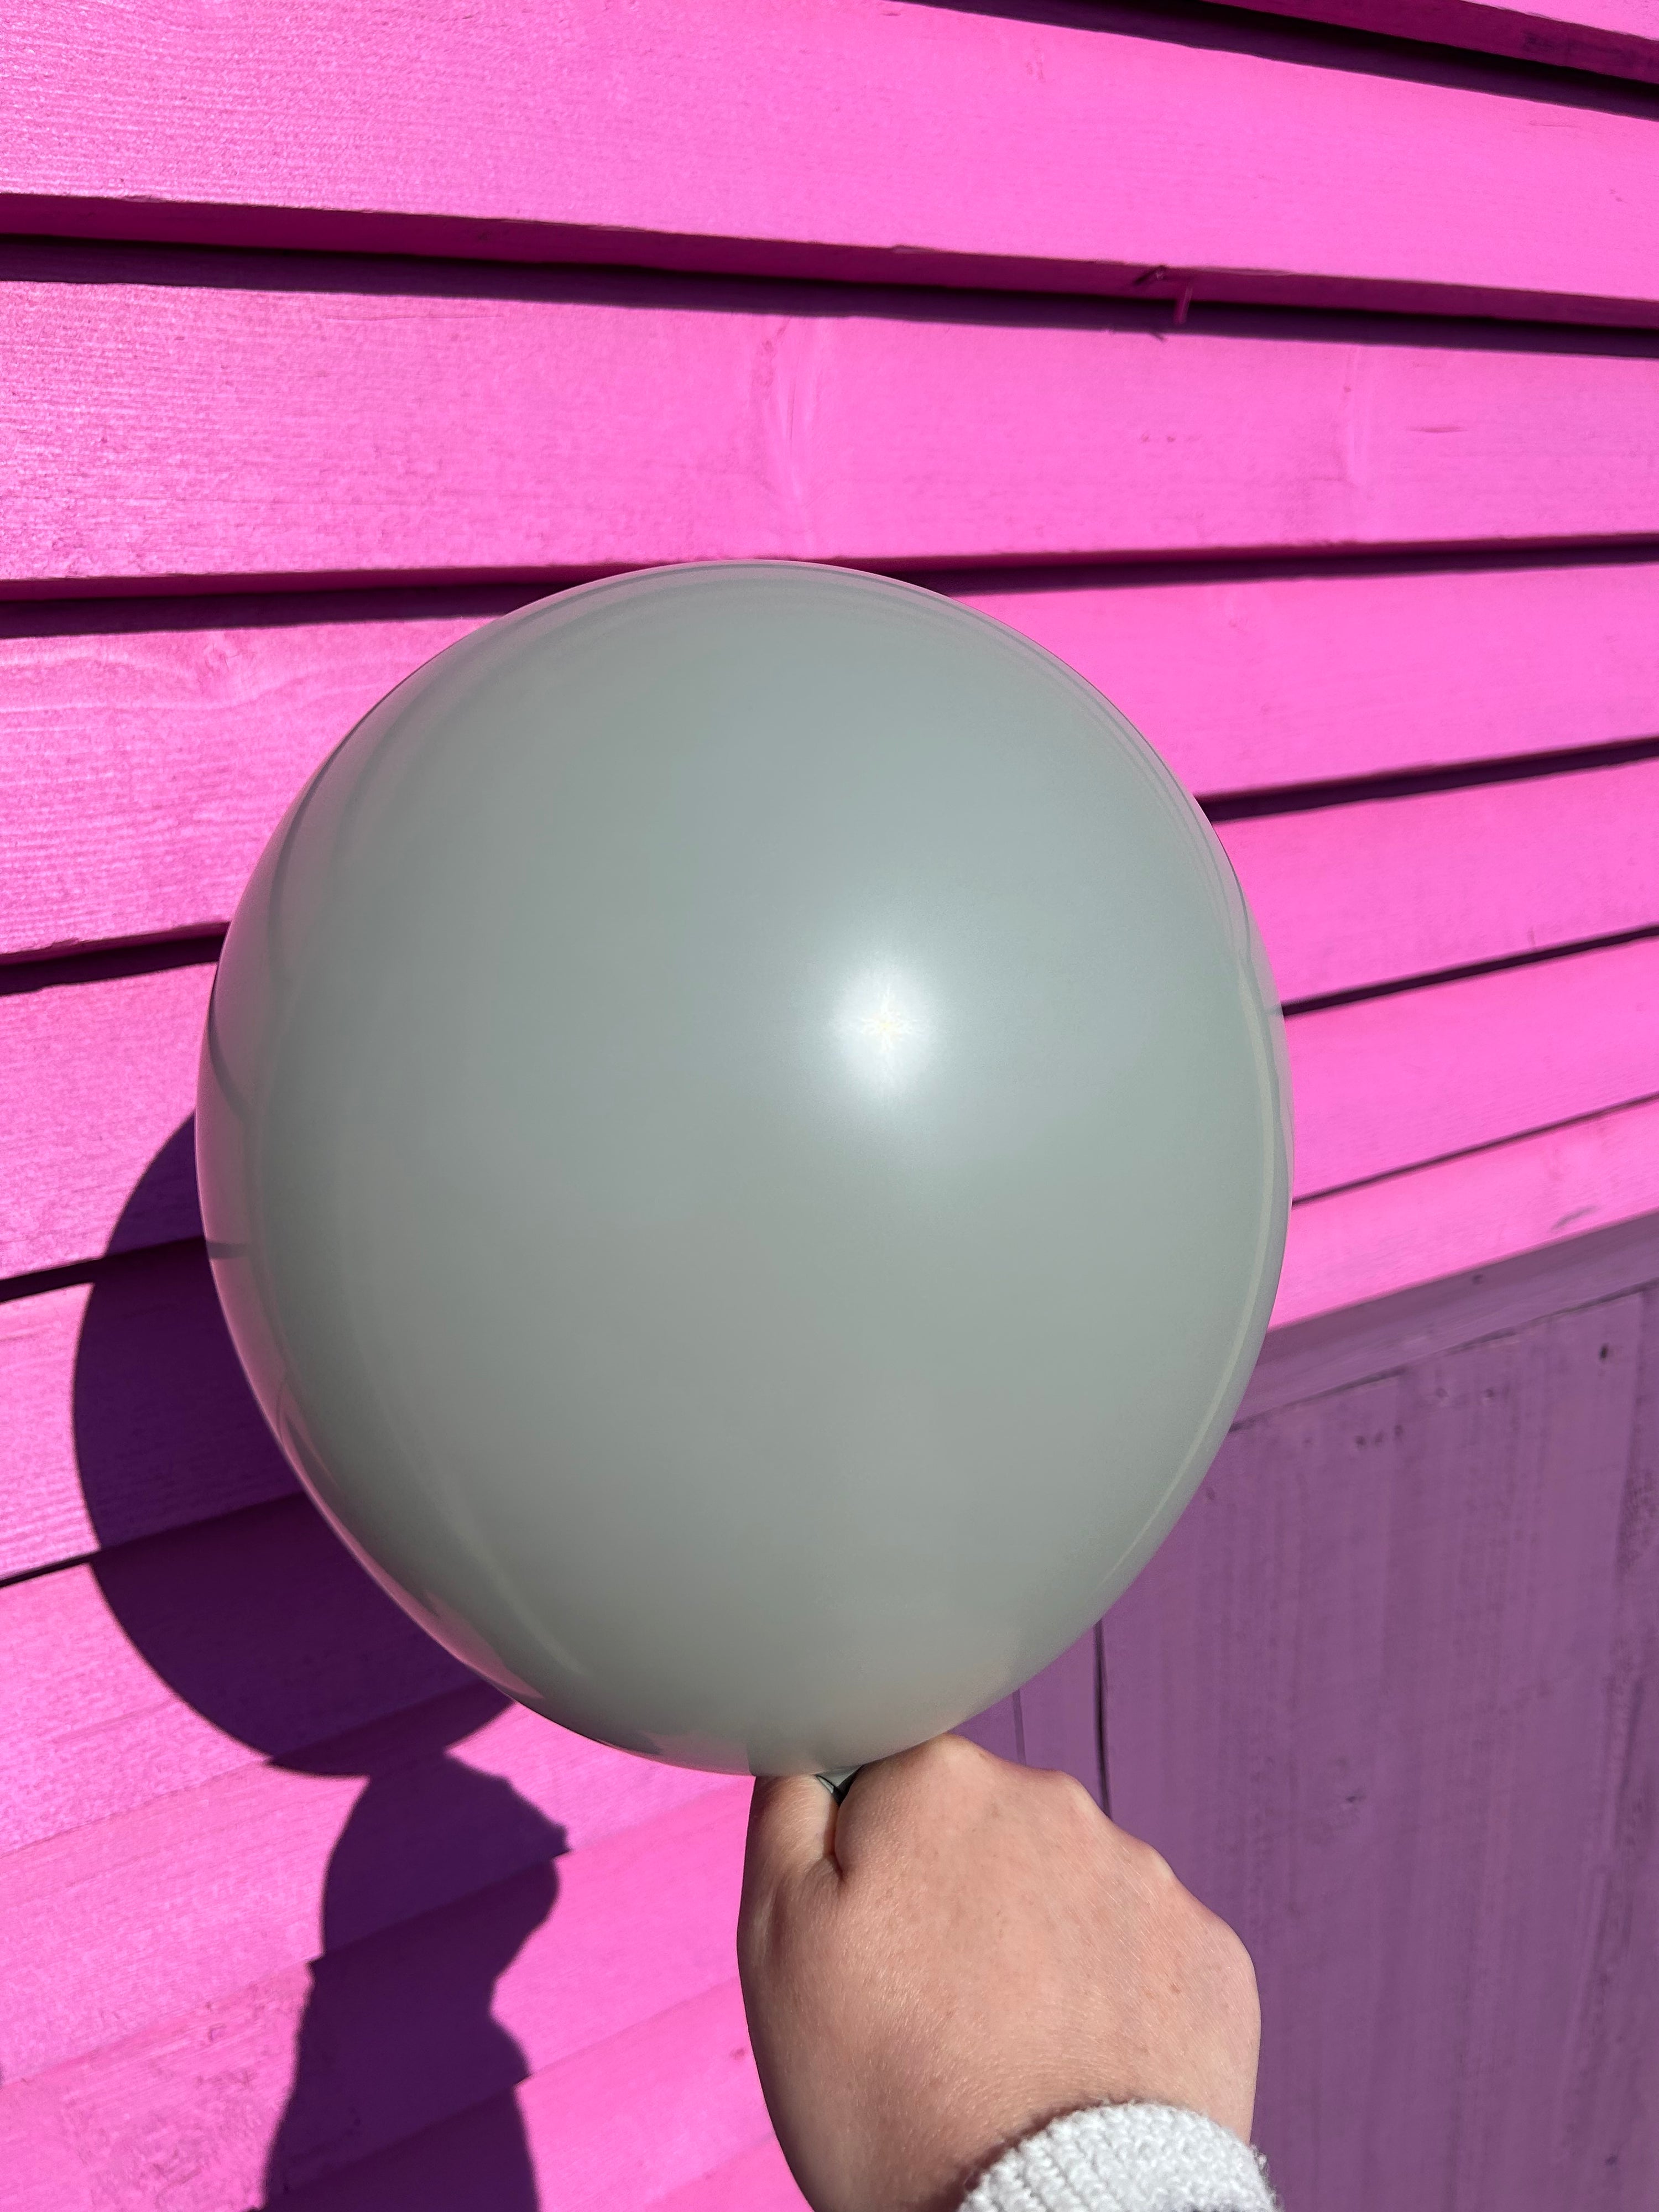 Sempertex Pastel Dusk Laurel Green – Pro Balloon Shop